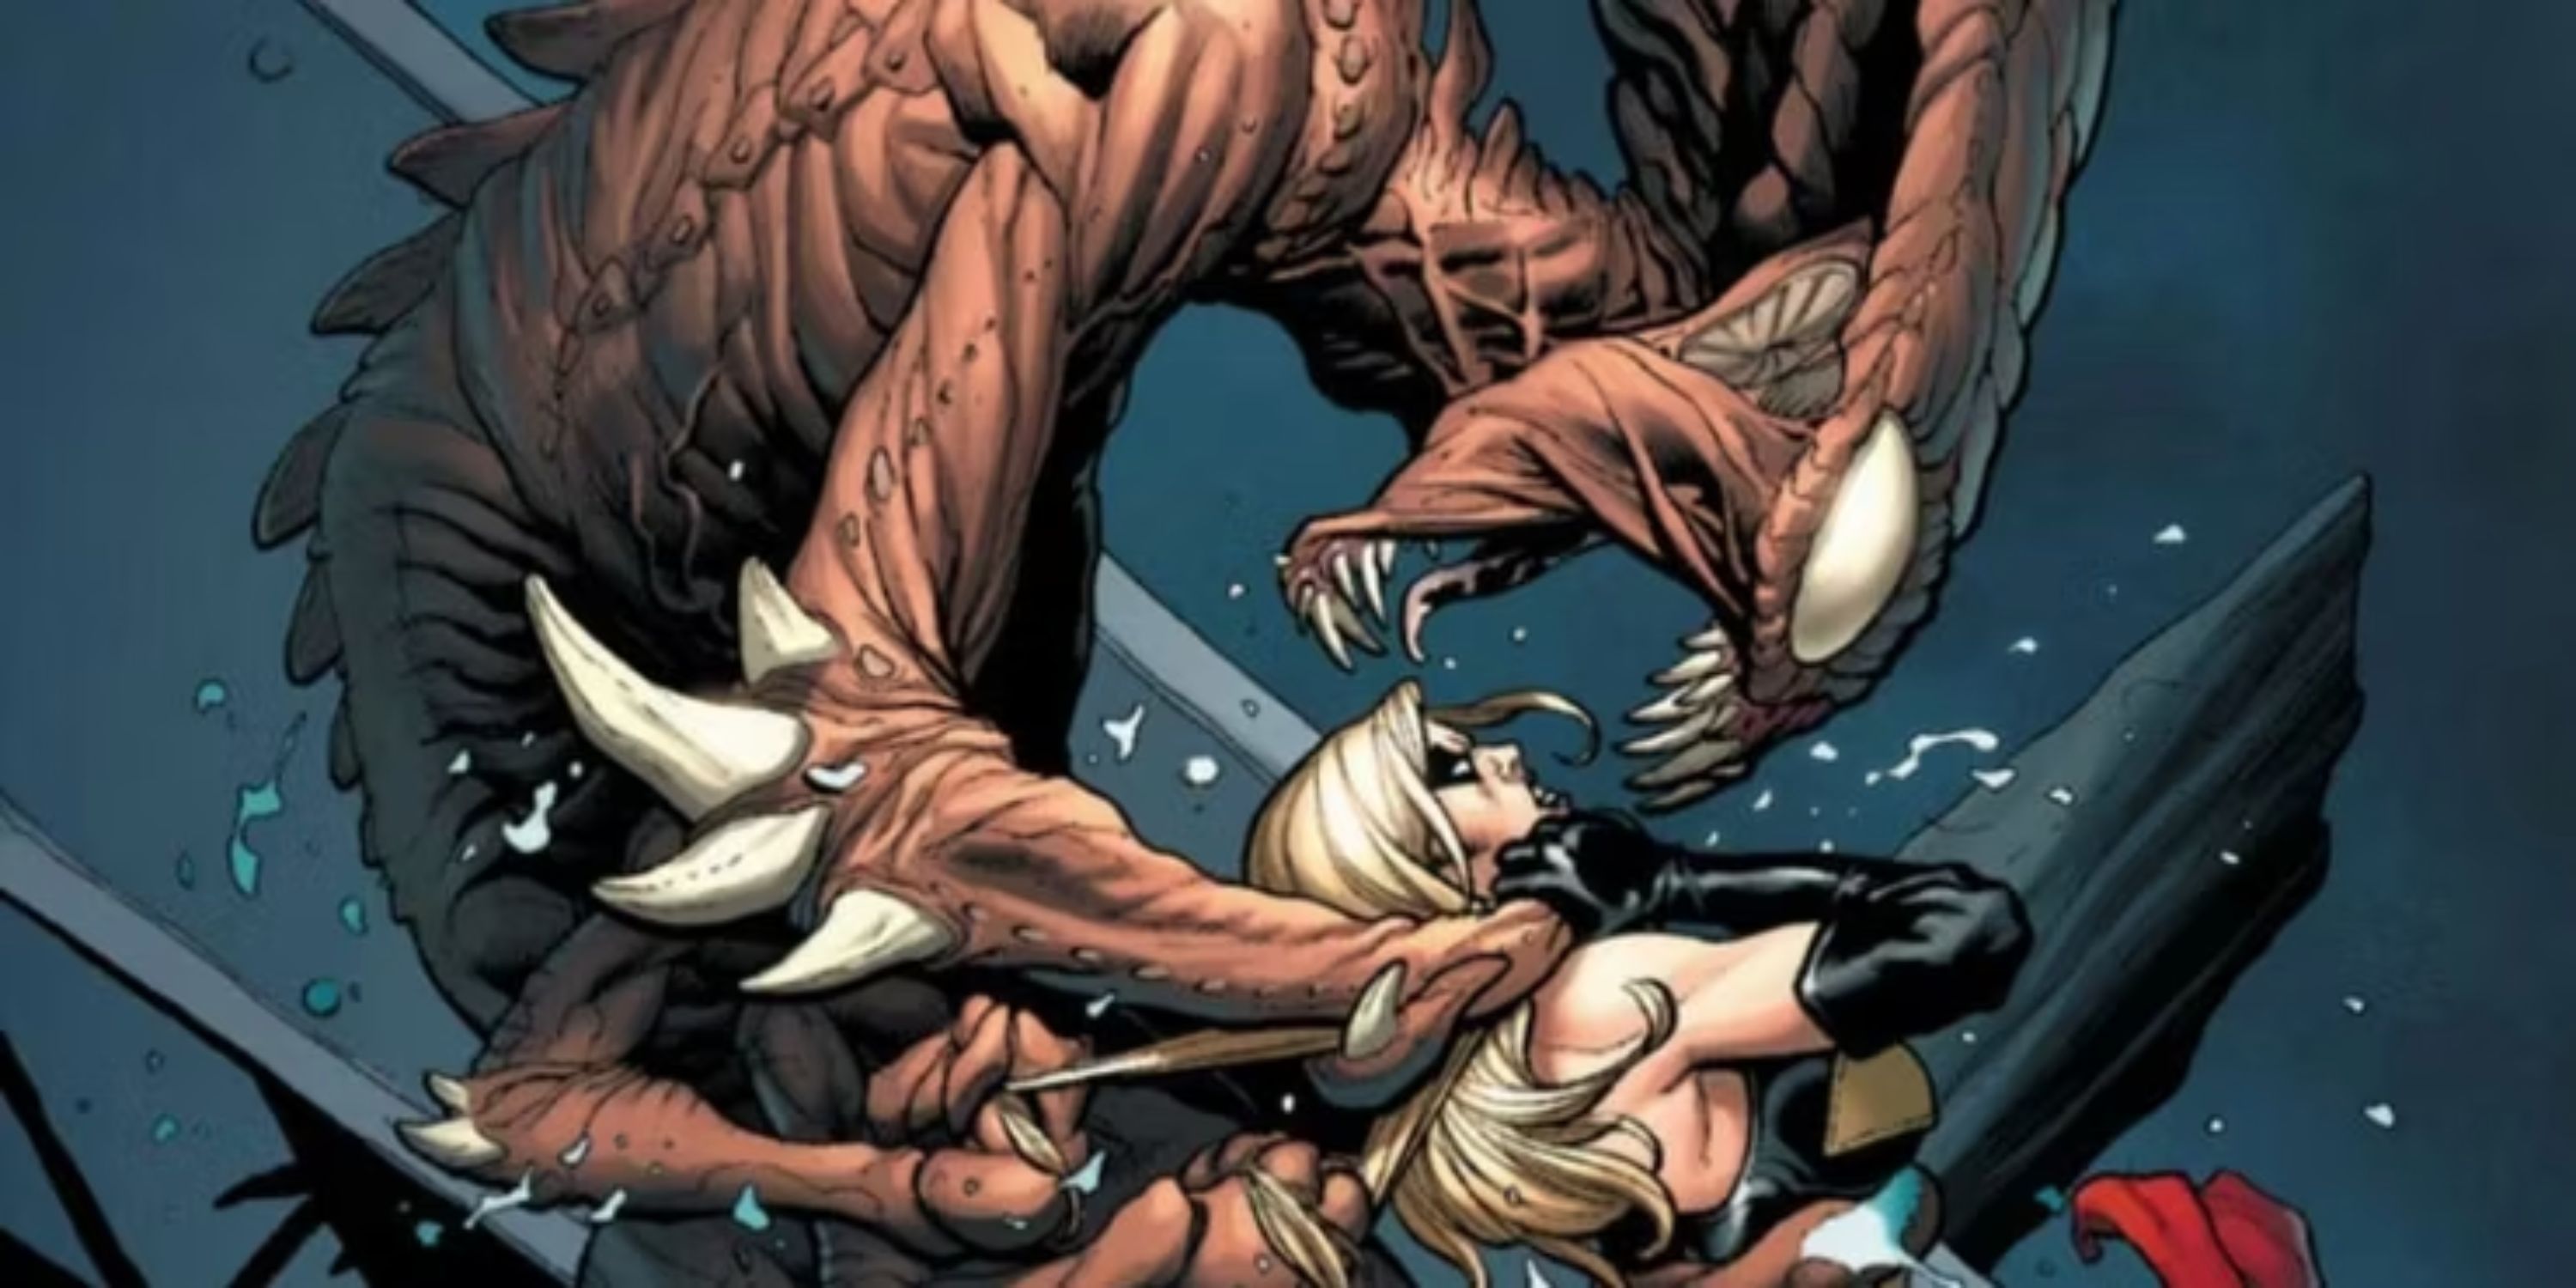 A Brood attacking Carol Danvers aka Ms Marvel